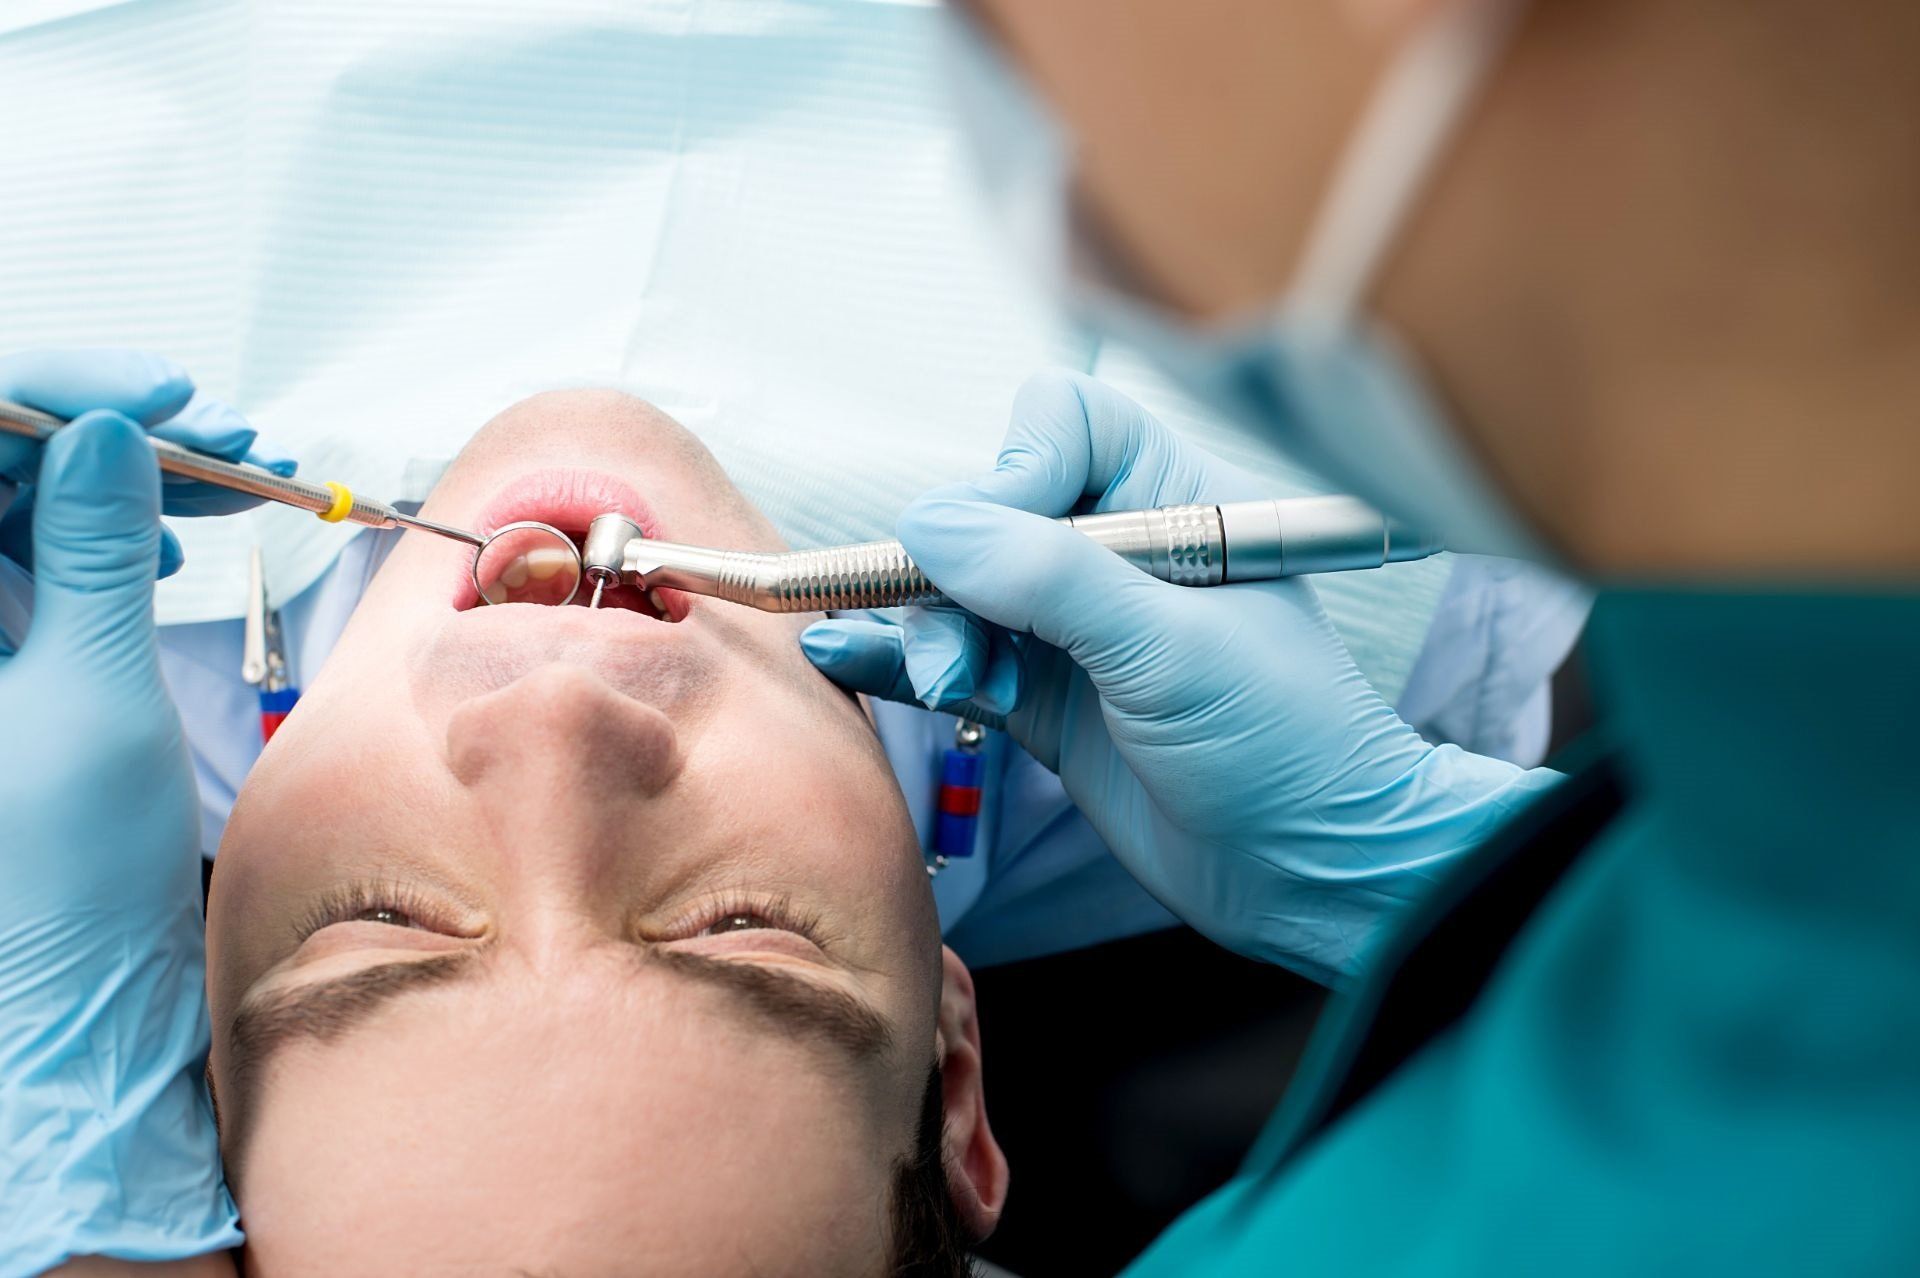 Examination of person's teeth